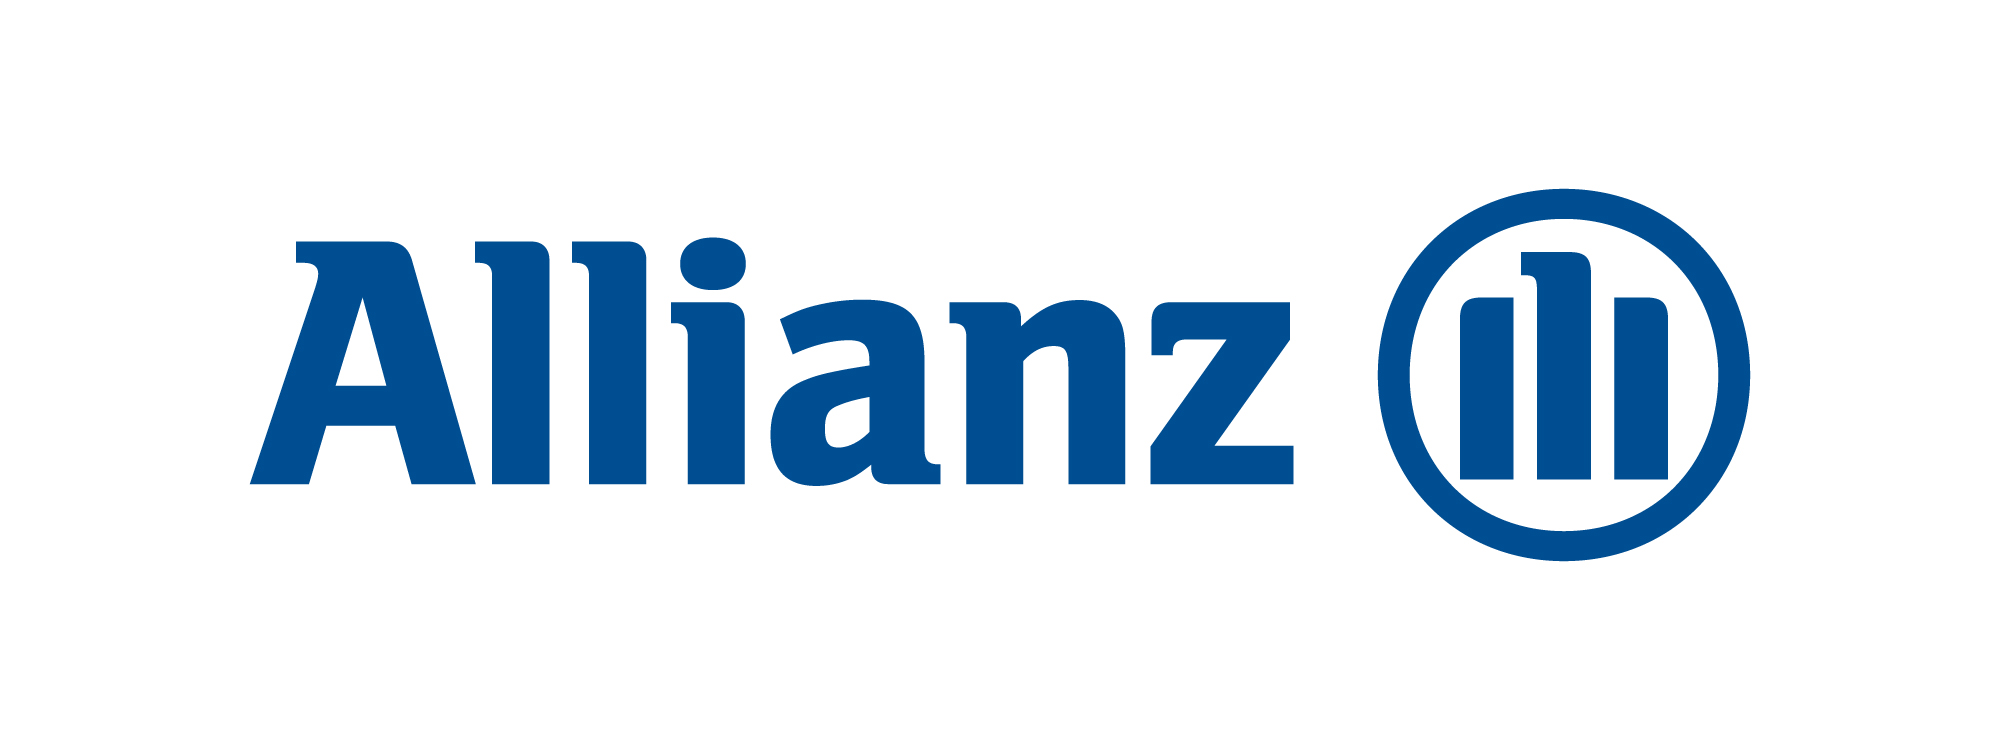 allianz_logo.jpg